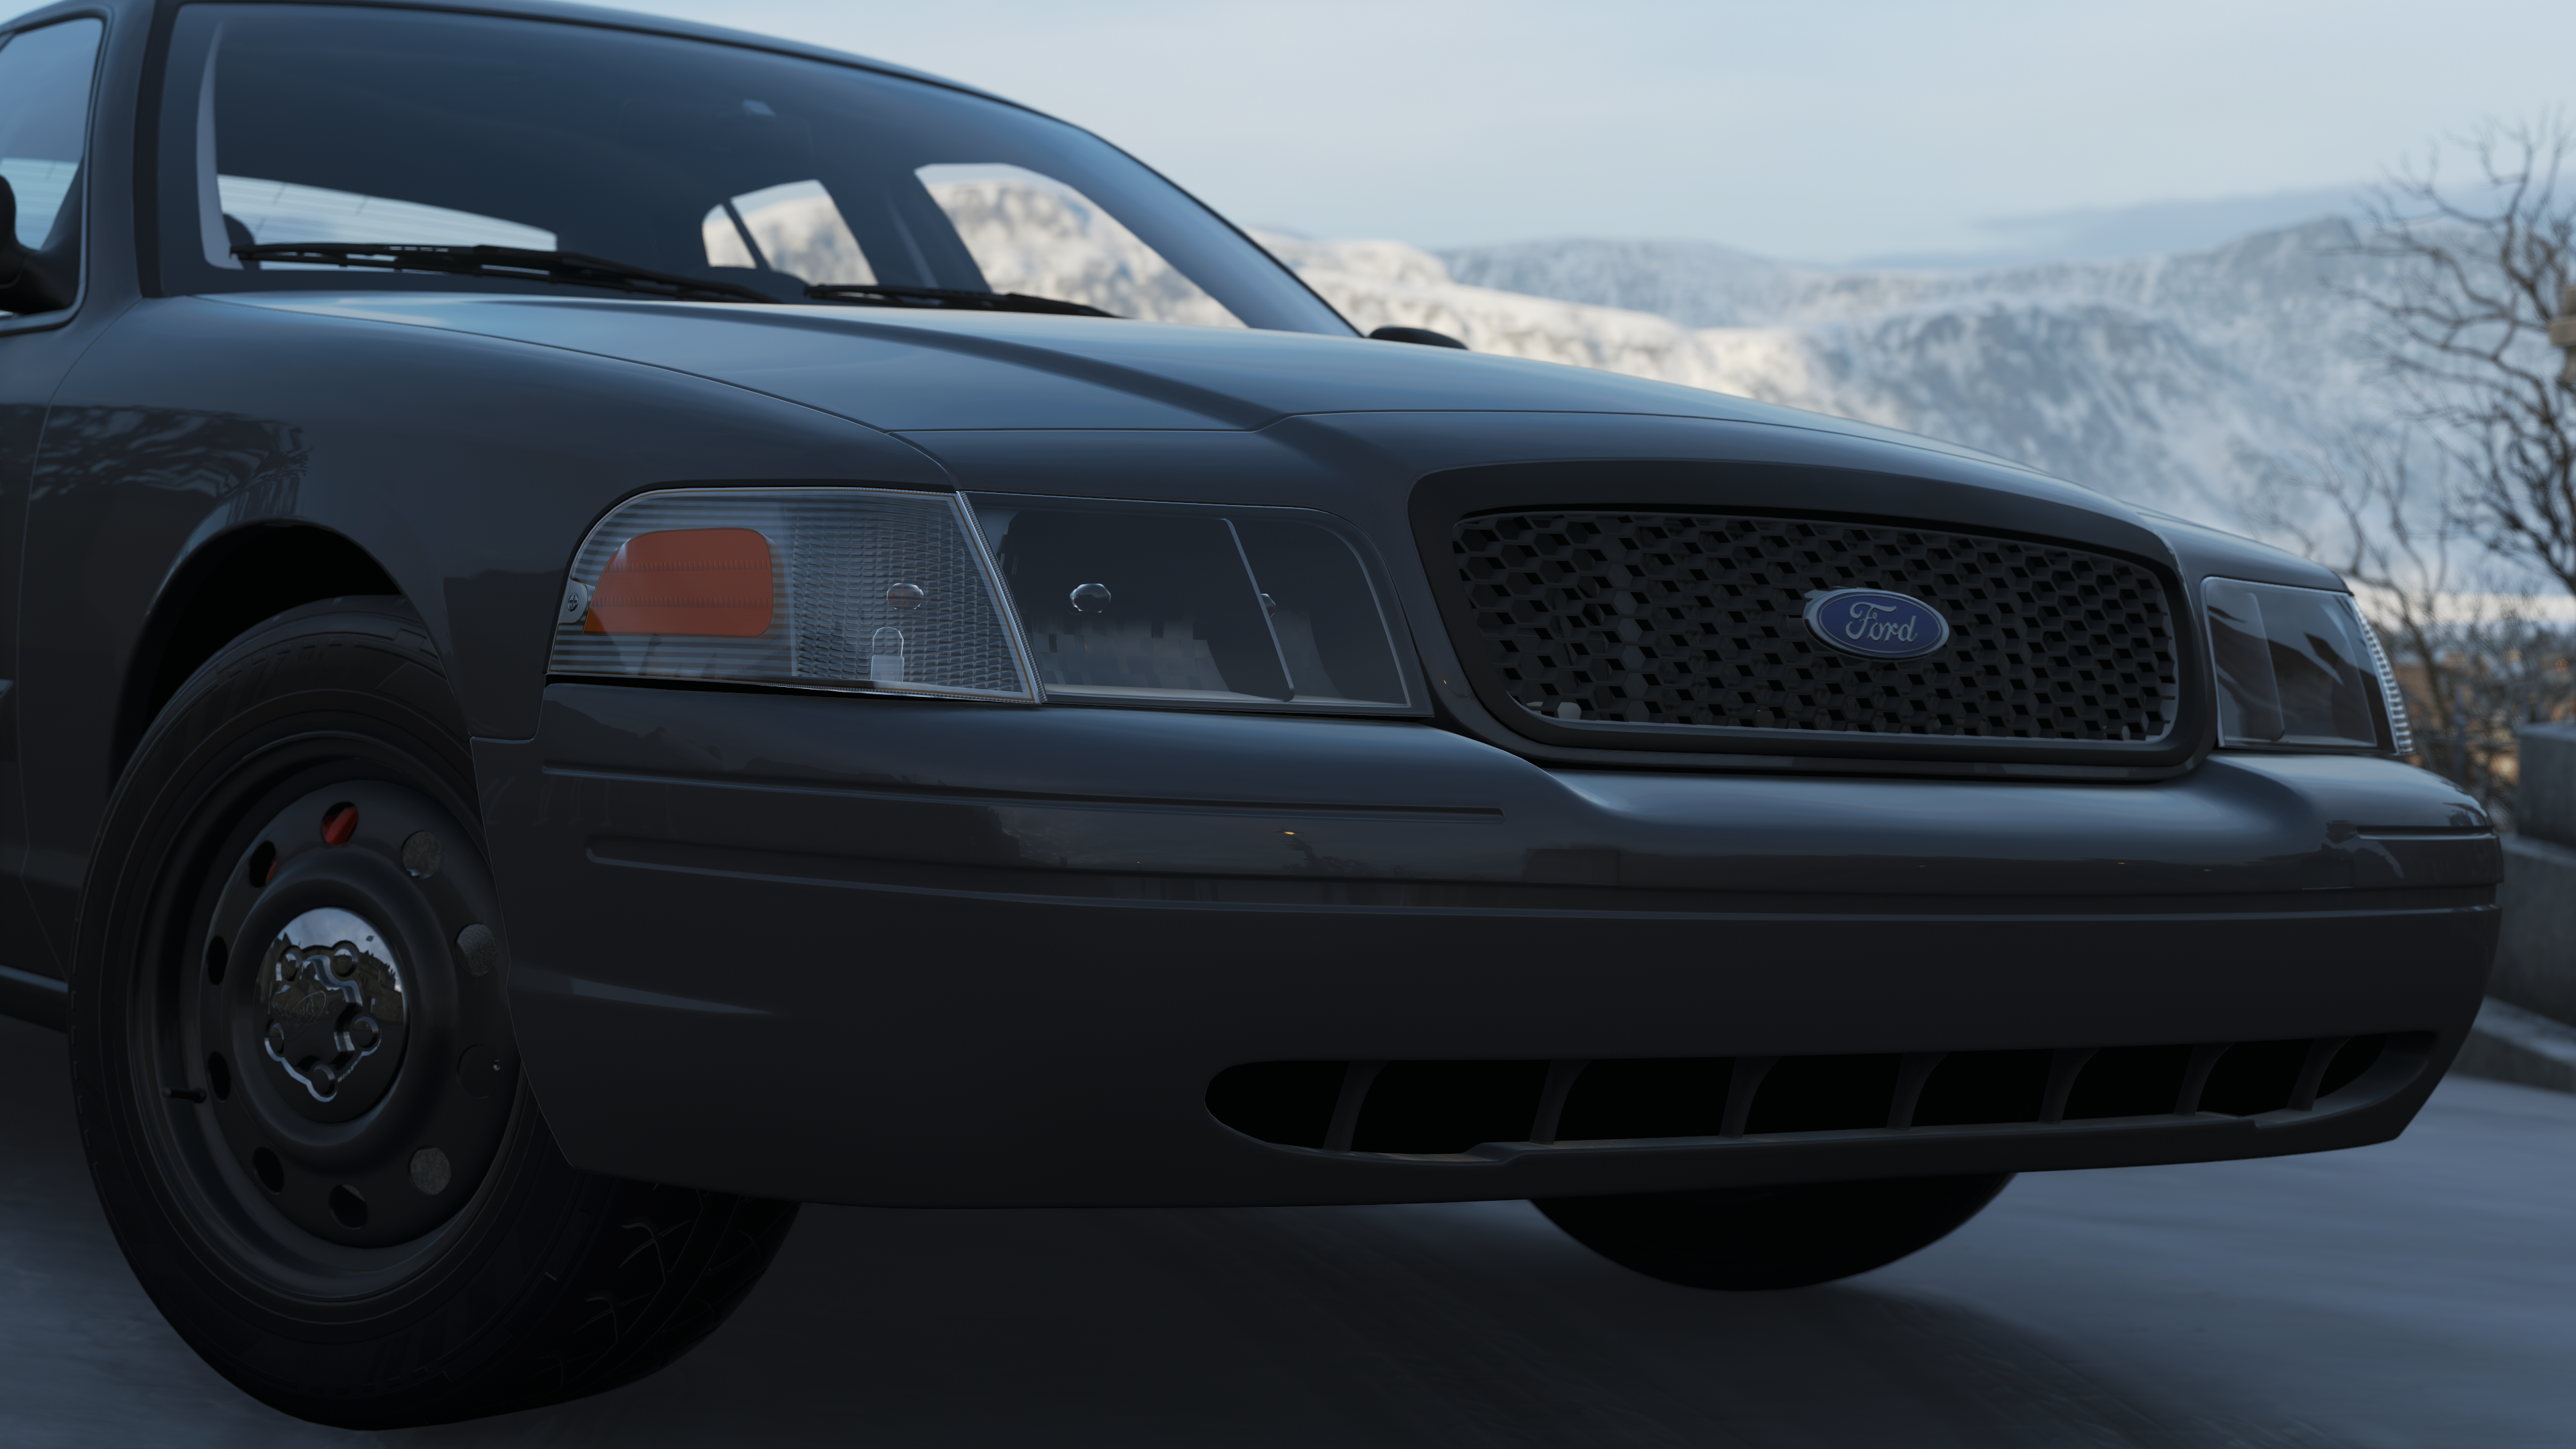 General 3840x2160 Forza Forza Horizon 4 Ford Crown Victoria Turn 10 Studios video games car vehicle black cars screen shot PC gaming